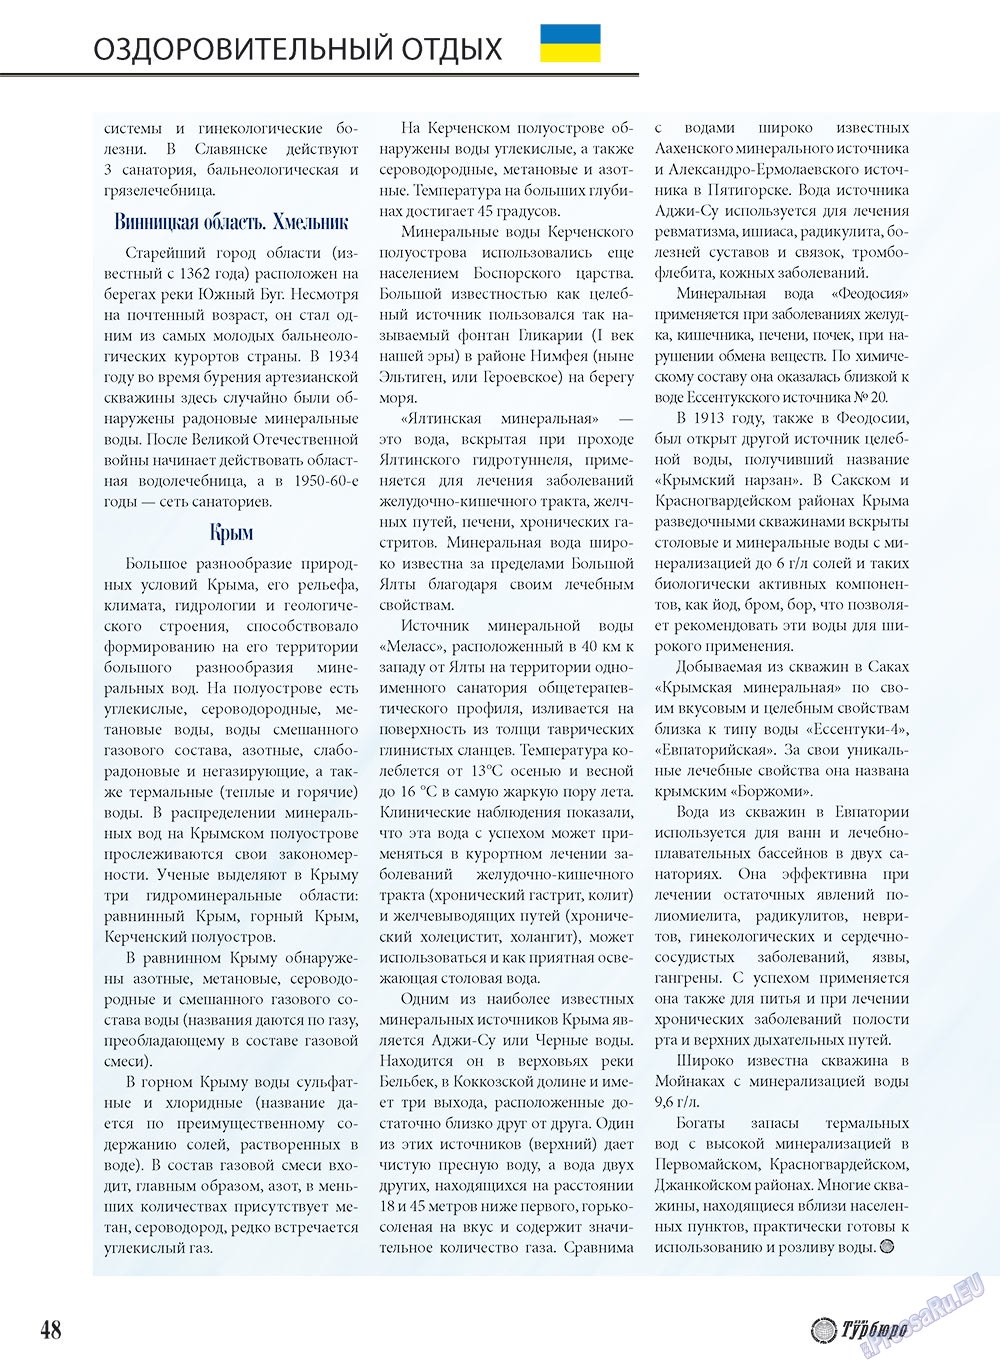 Наше Турбюро (журнал). 2010 год, номер 3, стр. 48